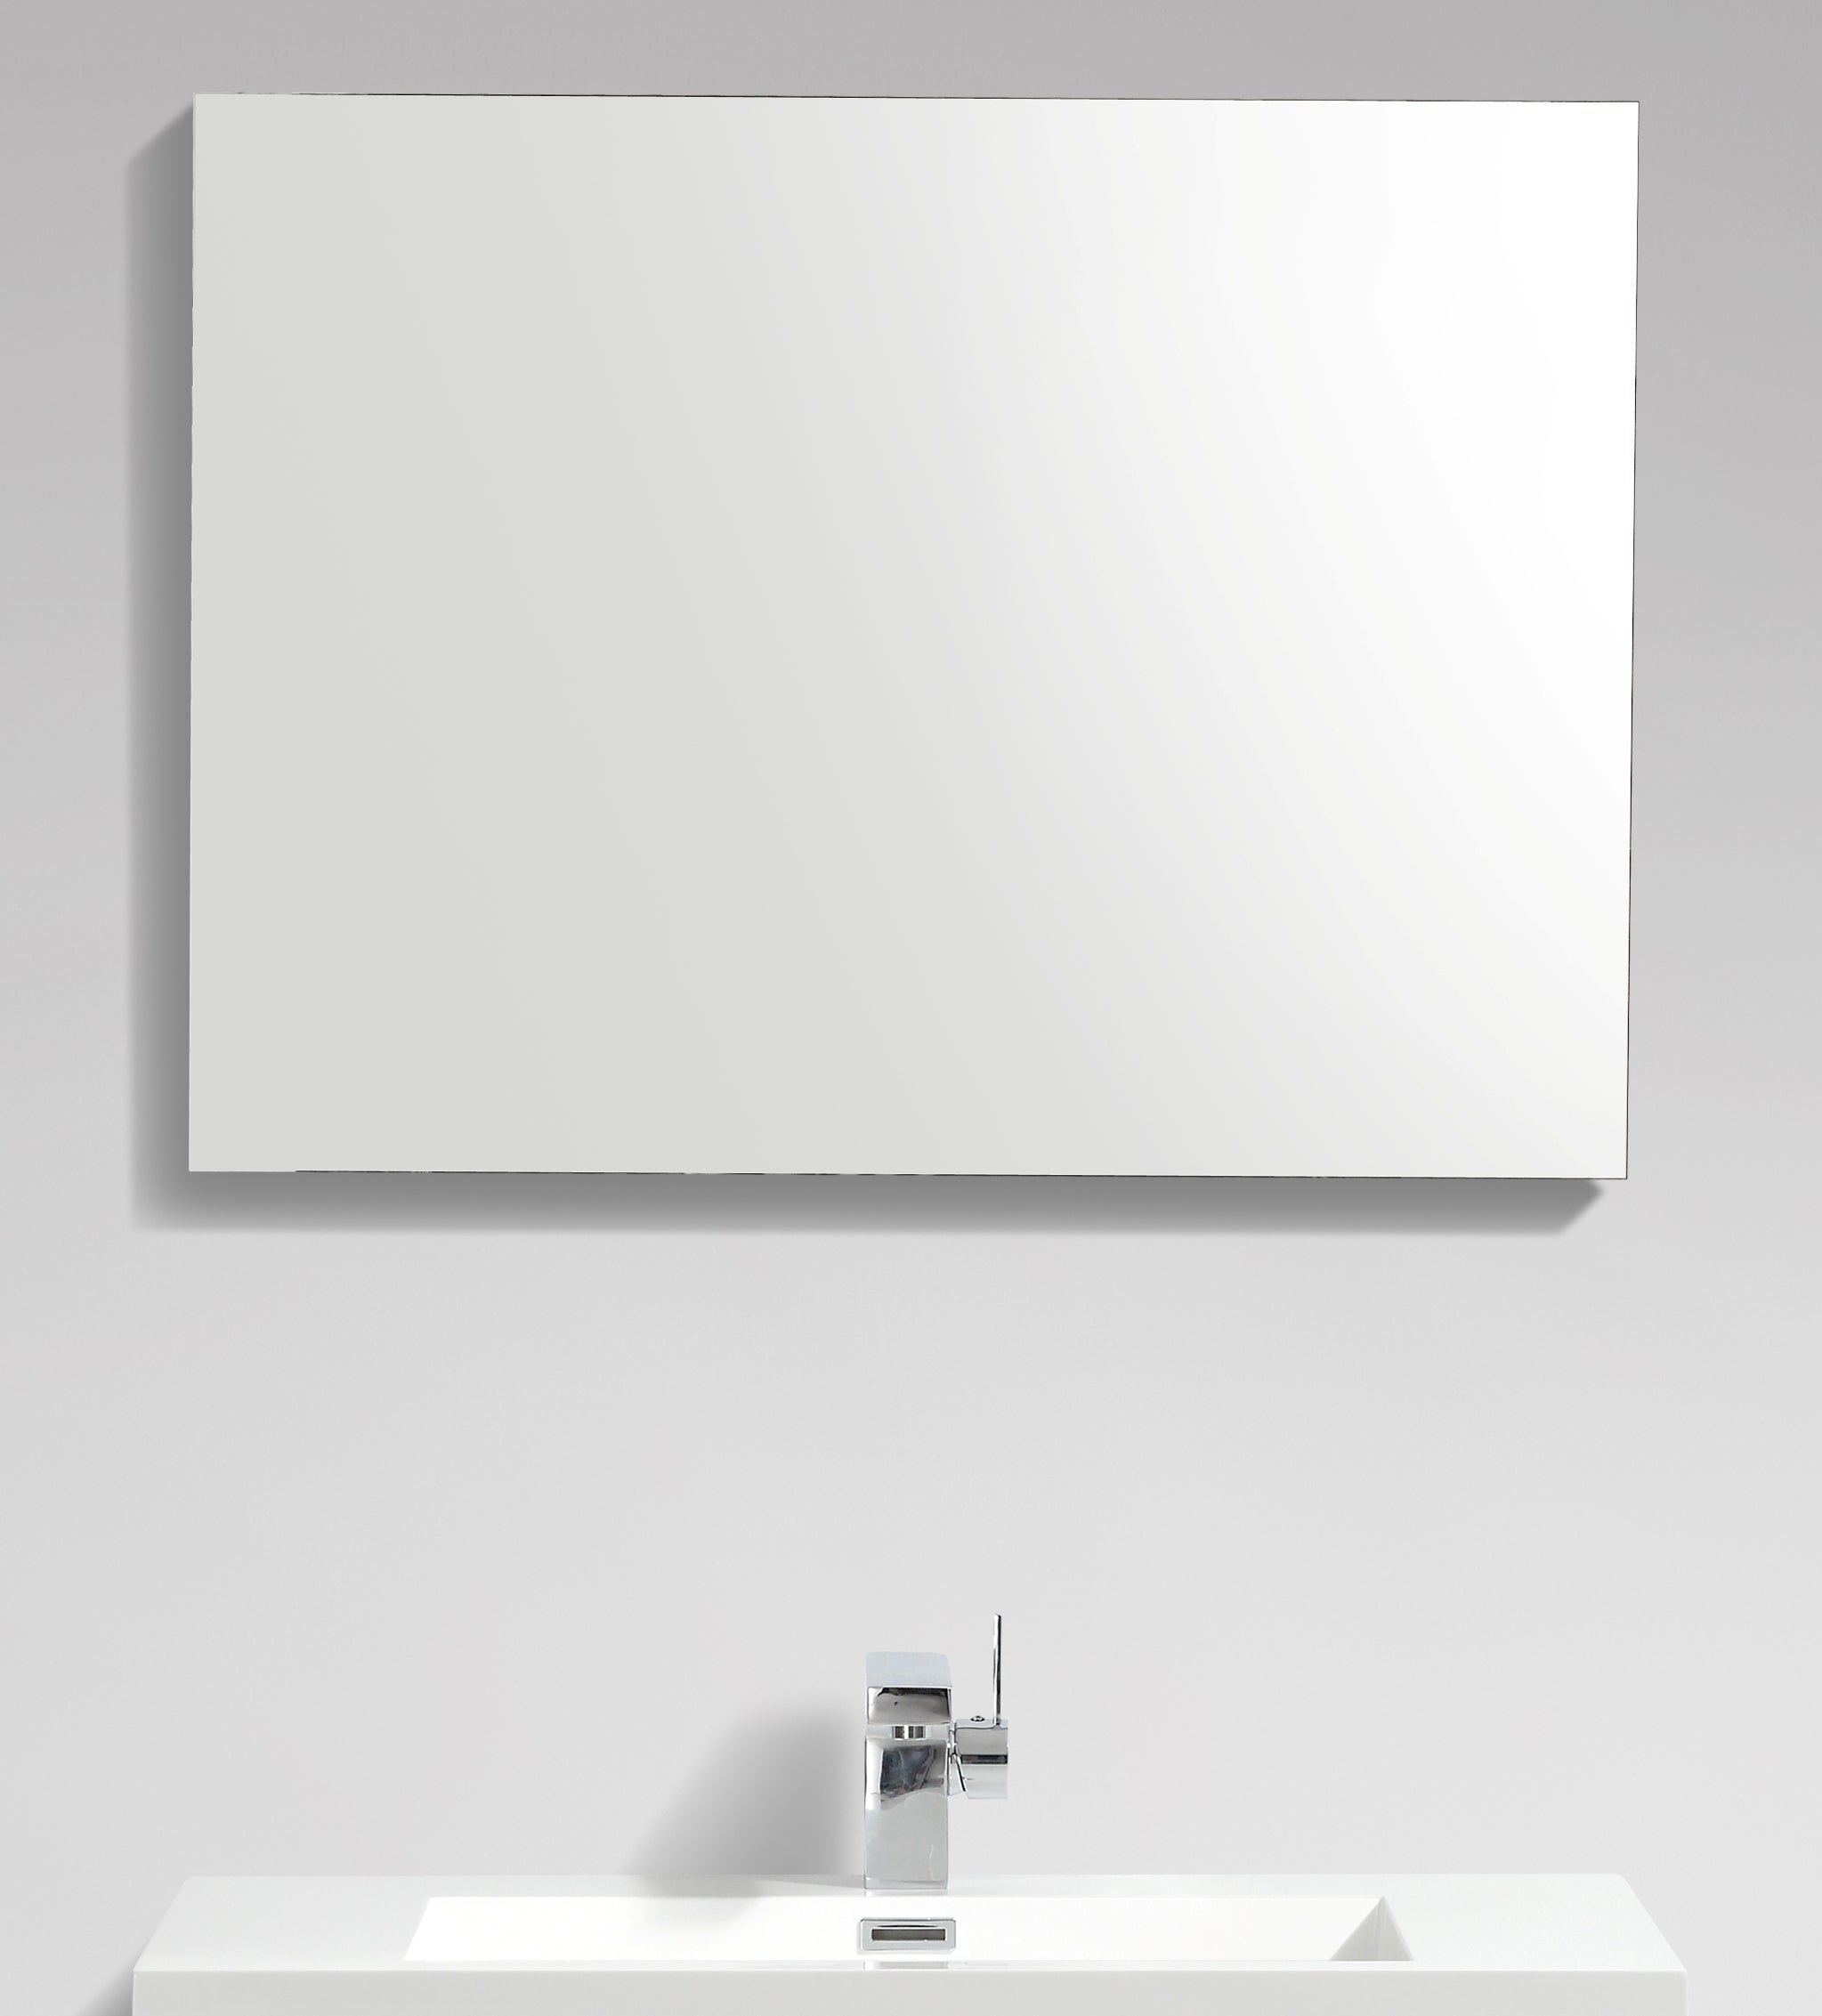 Aquamoon MP3131 Frameless Plain Rectangular Mirror Wall Mounted 31 x 31